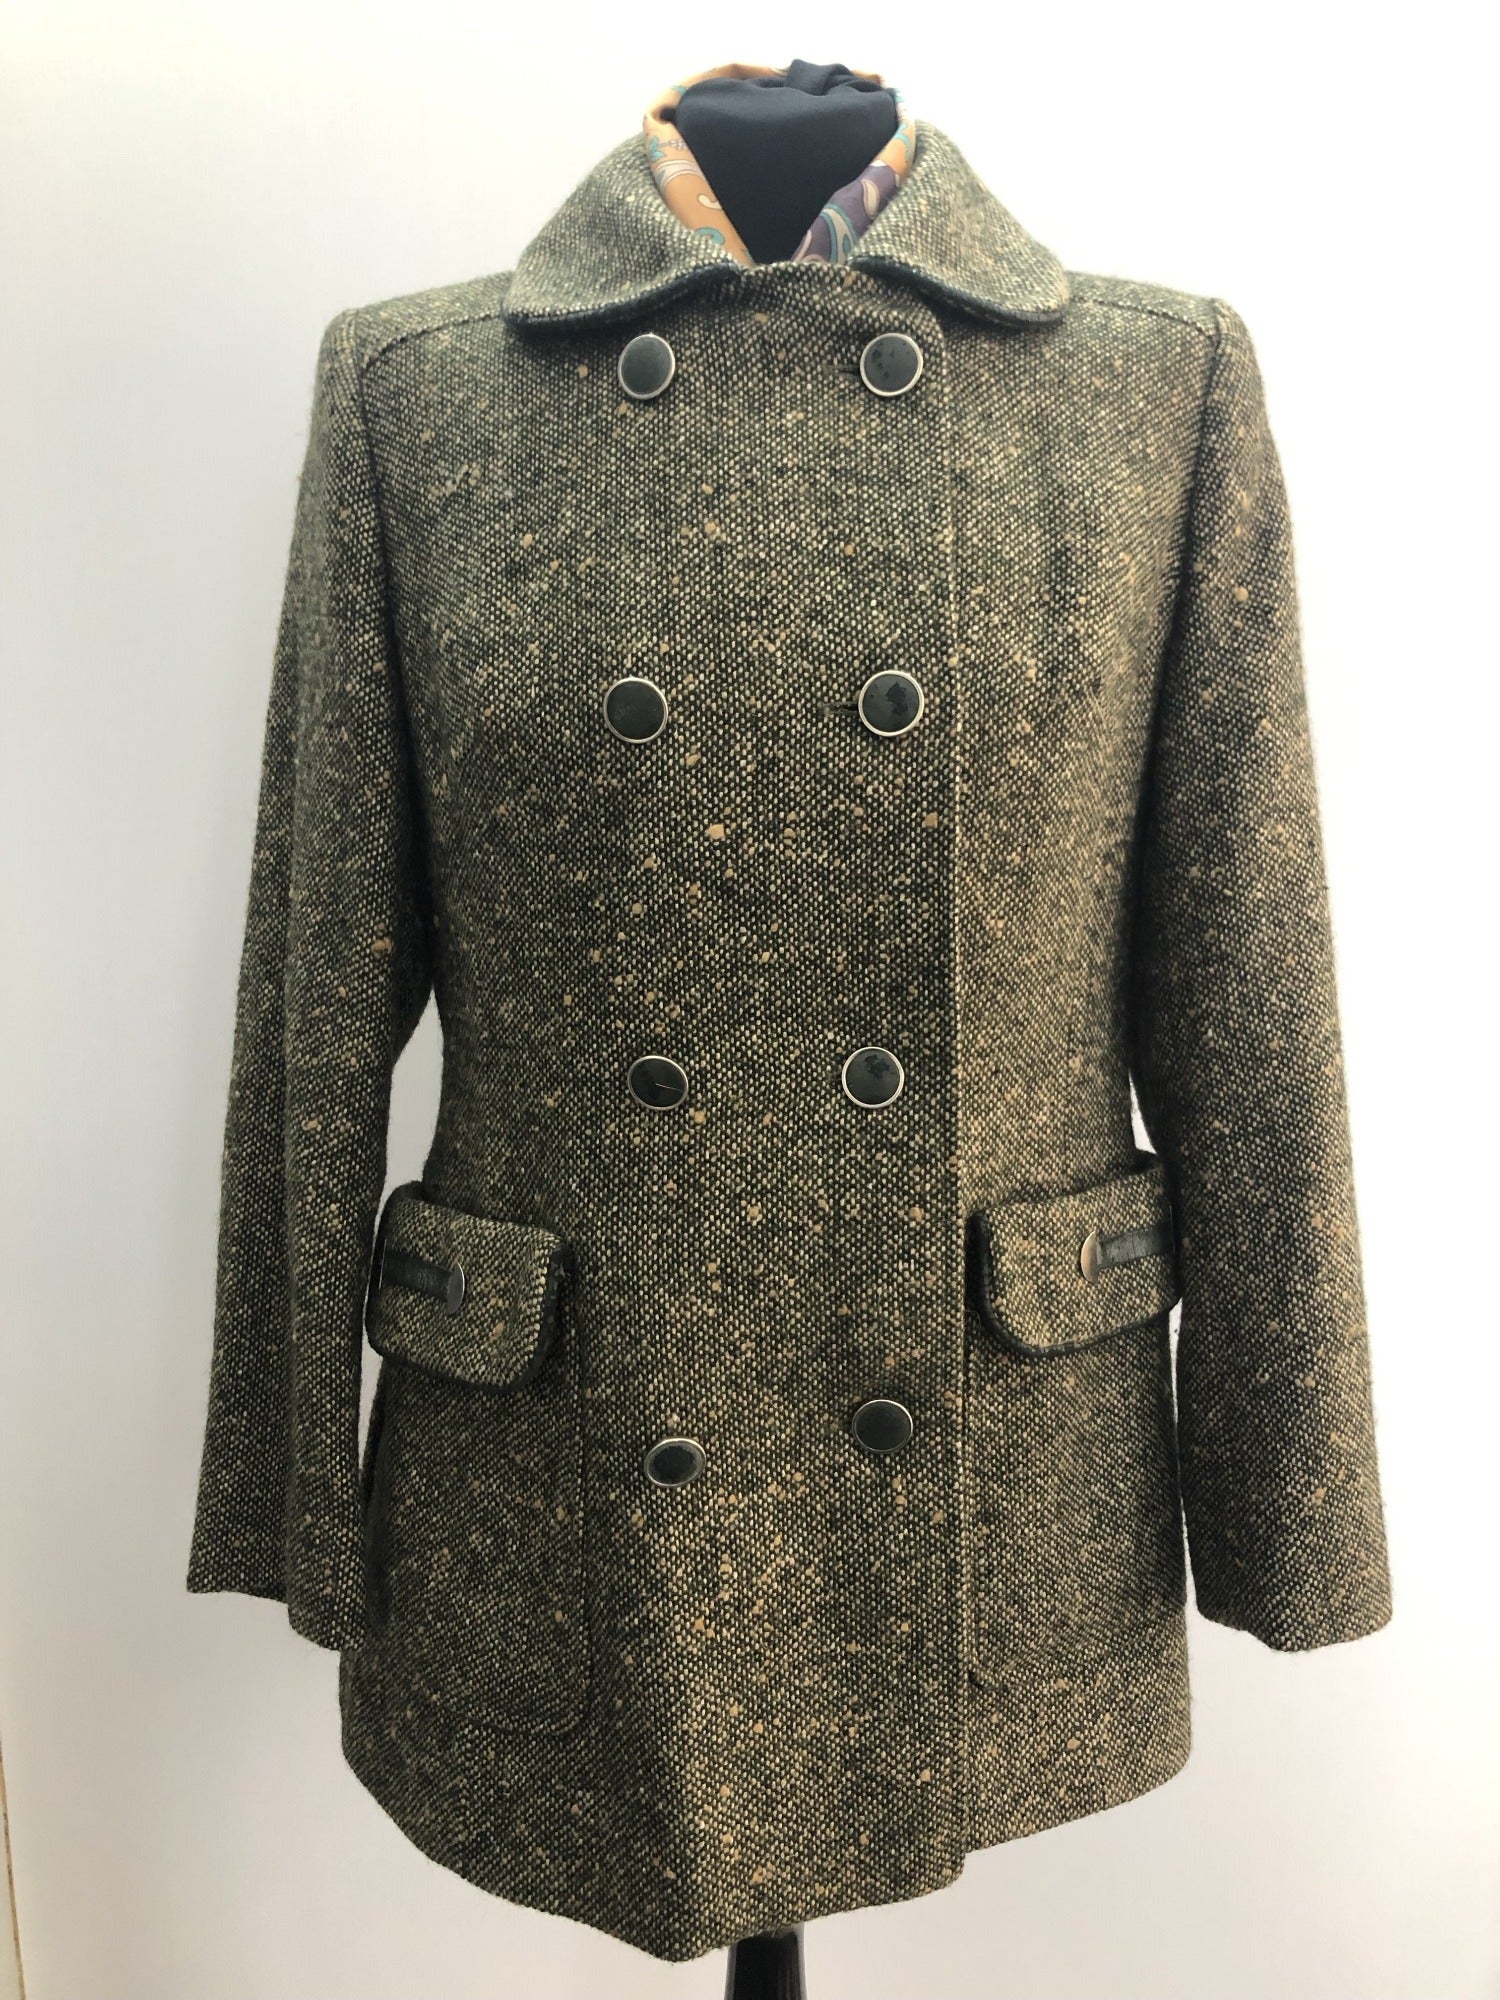 wool  womens  vintage  Urban Village Vintage  two piece  trousers  suit  set  MOD  Jacket  brown  blazer jacket  Alexon  60s  1960s  10